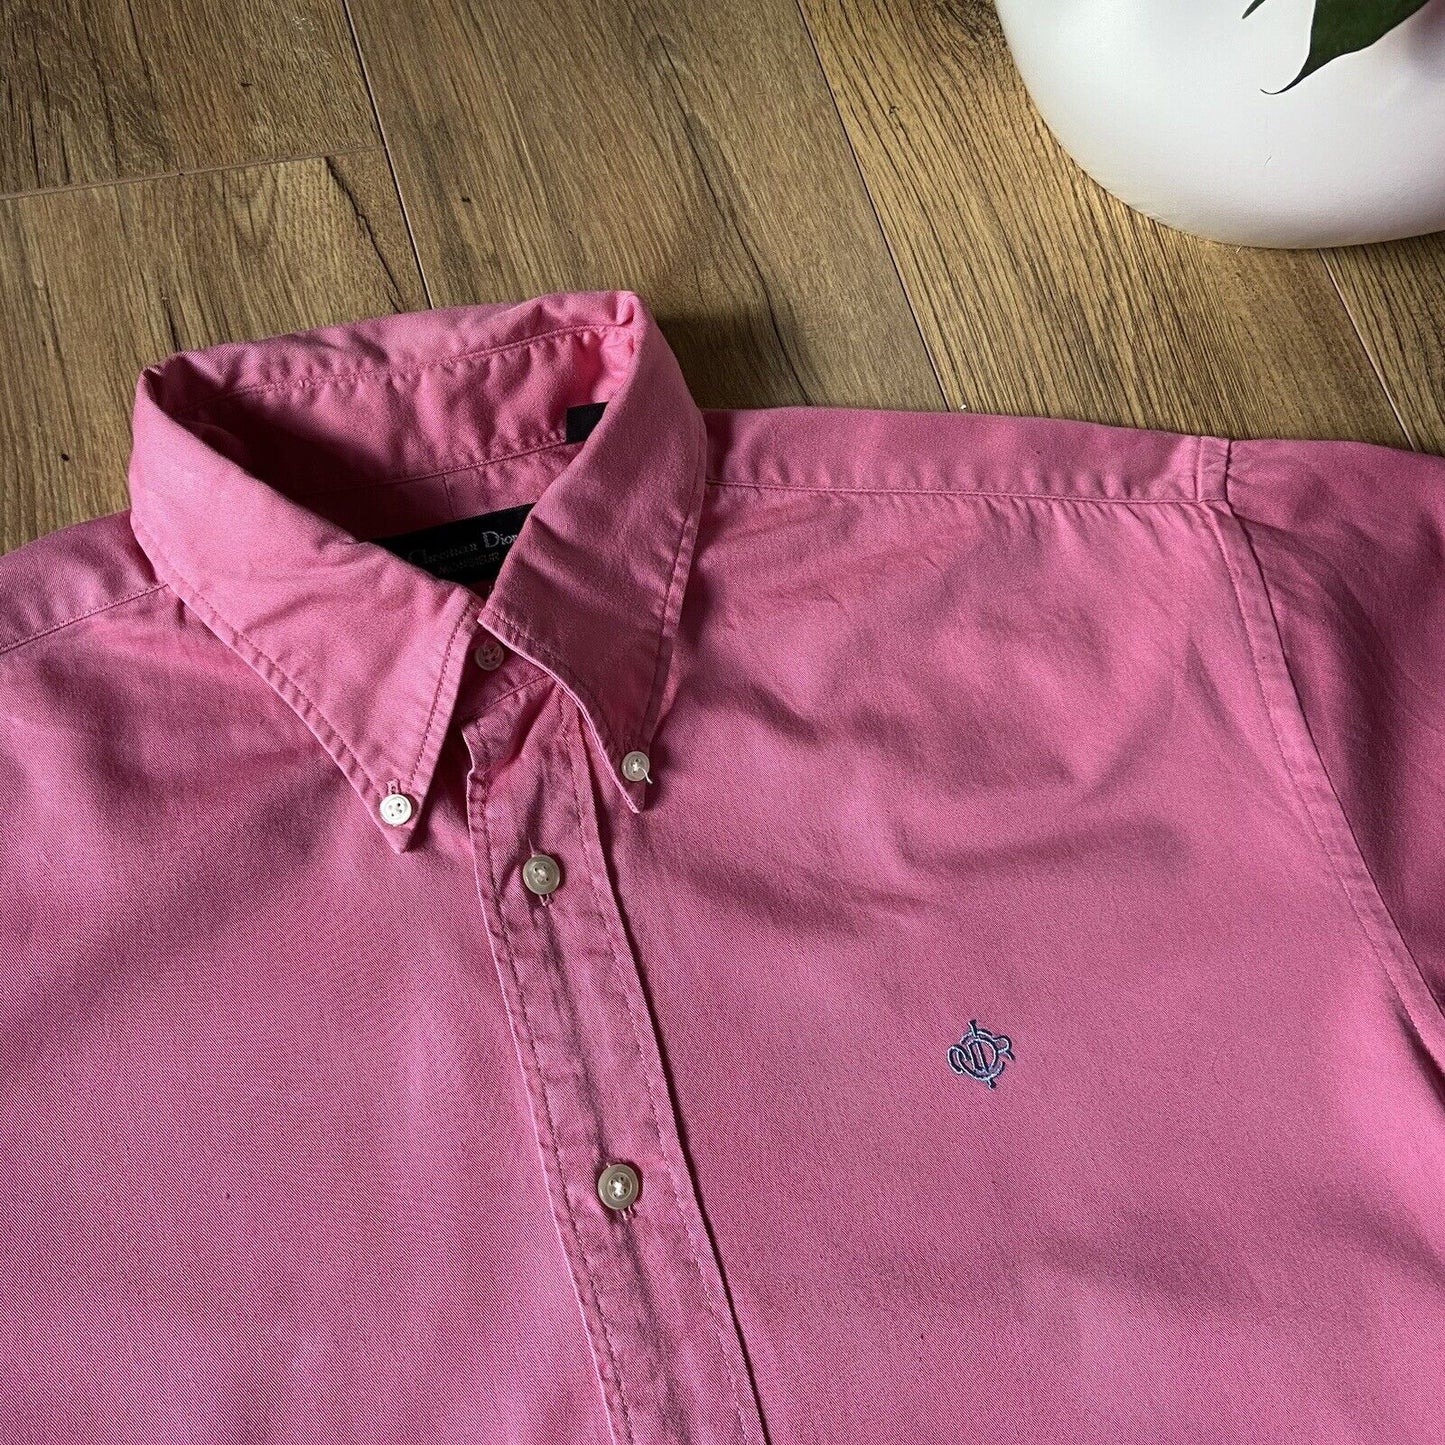 Vintage Christian Dior Oxford Shirt 90s Size L Pink Cotton Mens